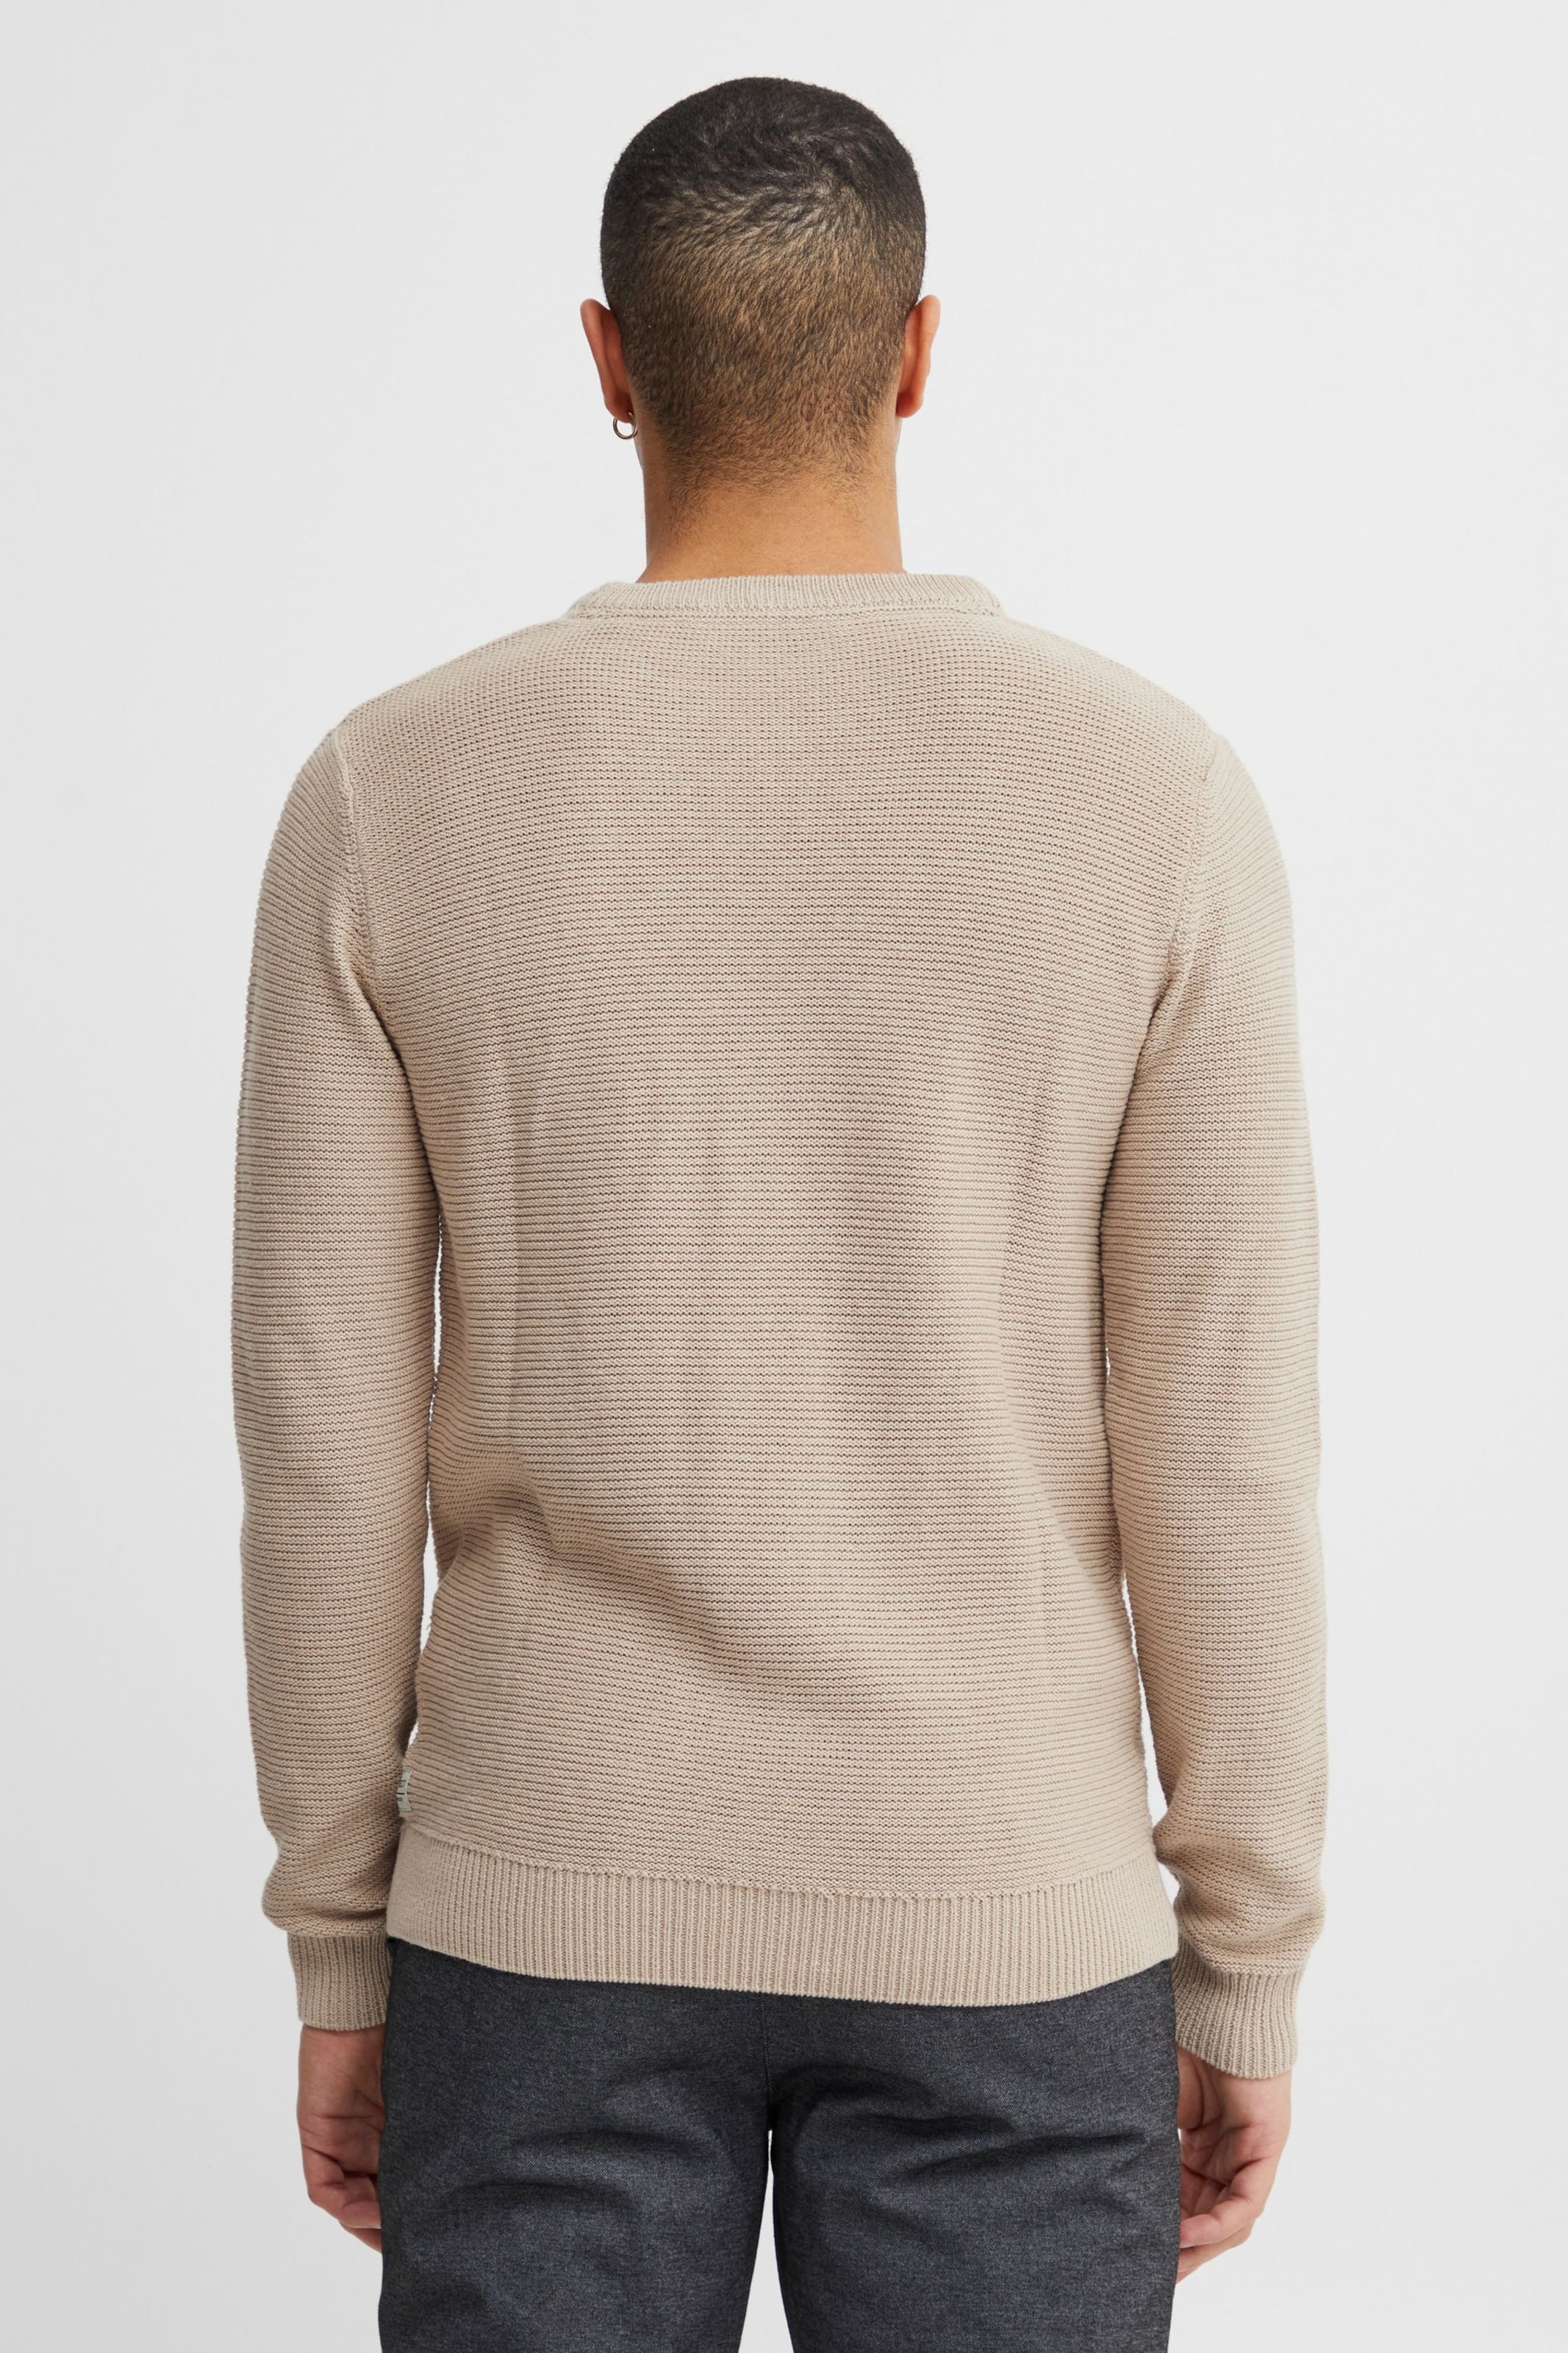 11+ Light Brown Sweater